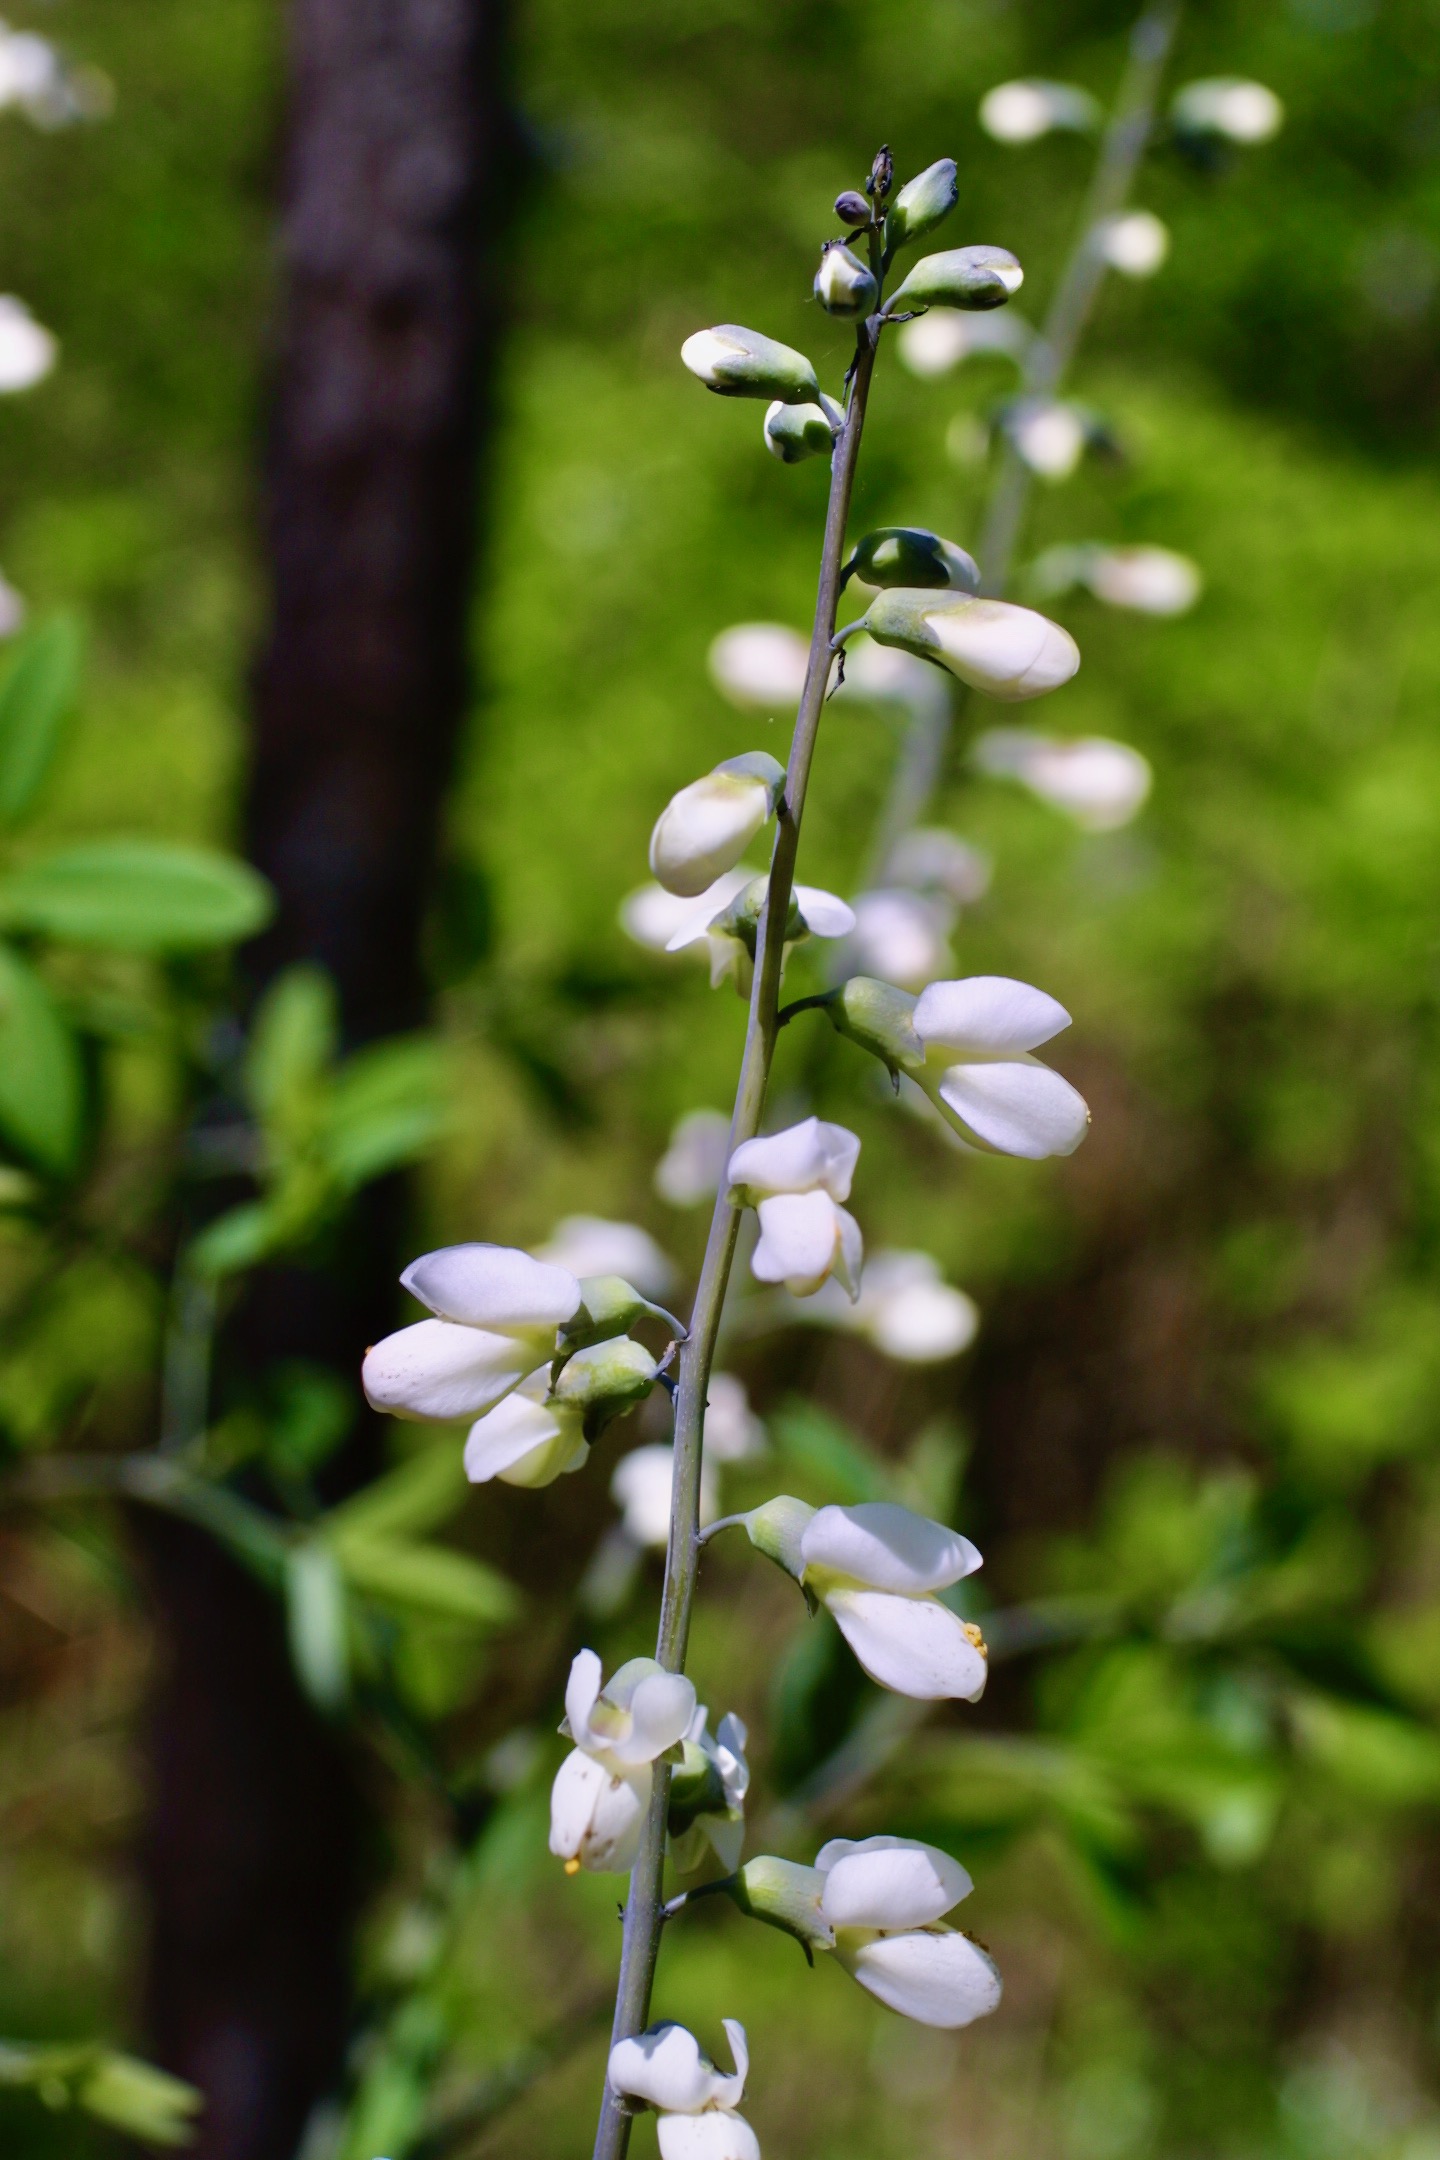 The Scientific Name is Baptisia alba [= Baptisia pendula]. You will likely hear them called Thick-pod White Wild Indigo. This picture shows the White flowers with waxy, purplish stem of Baptisia alba [= Baptisia pendula]